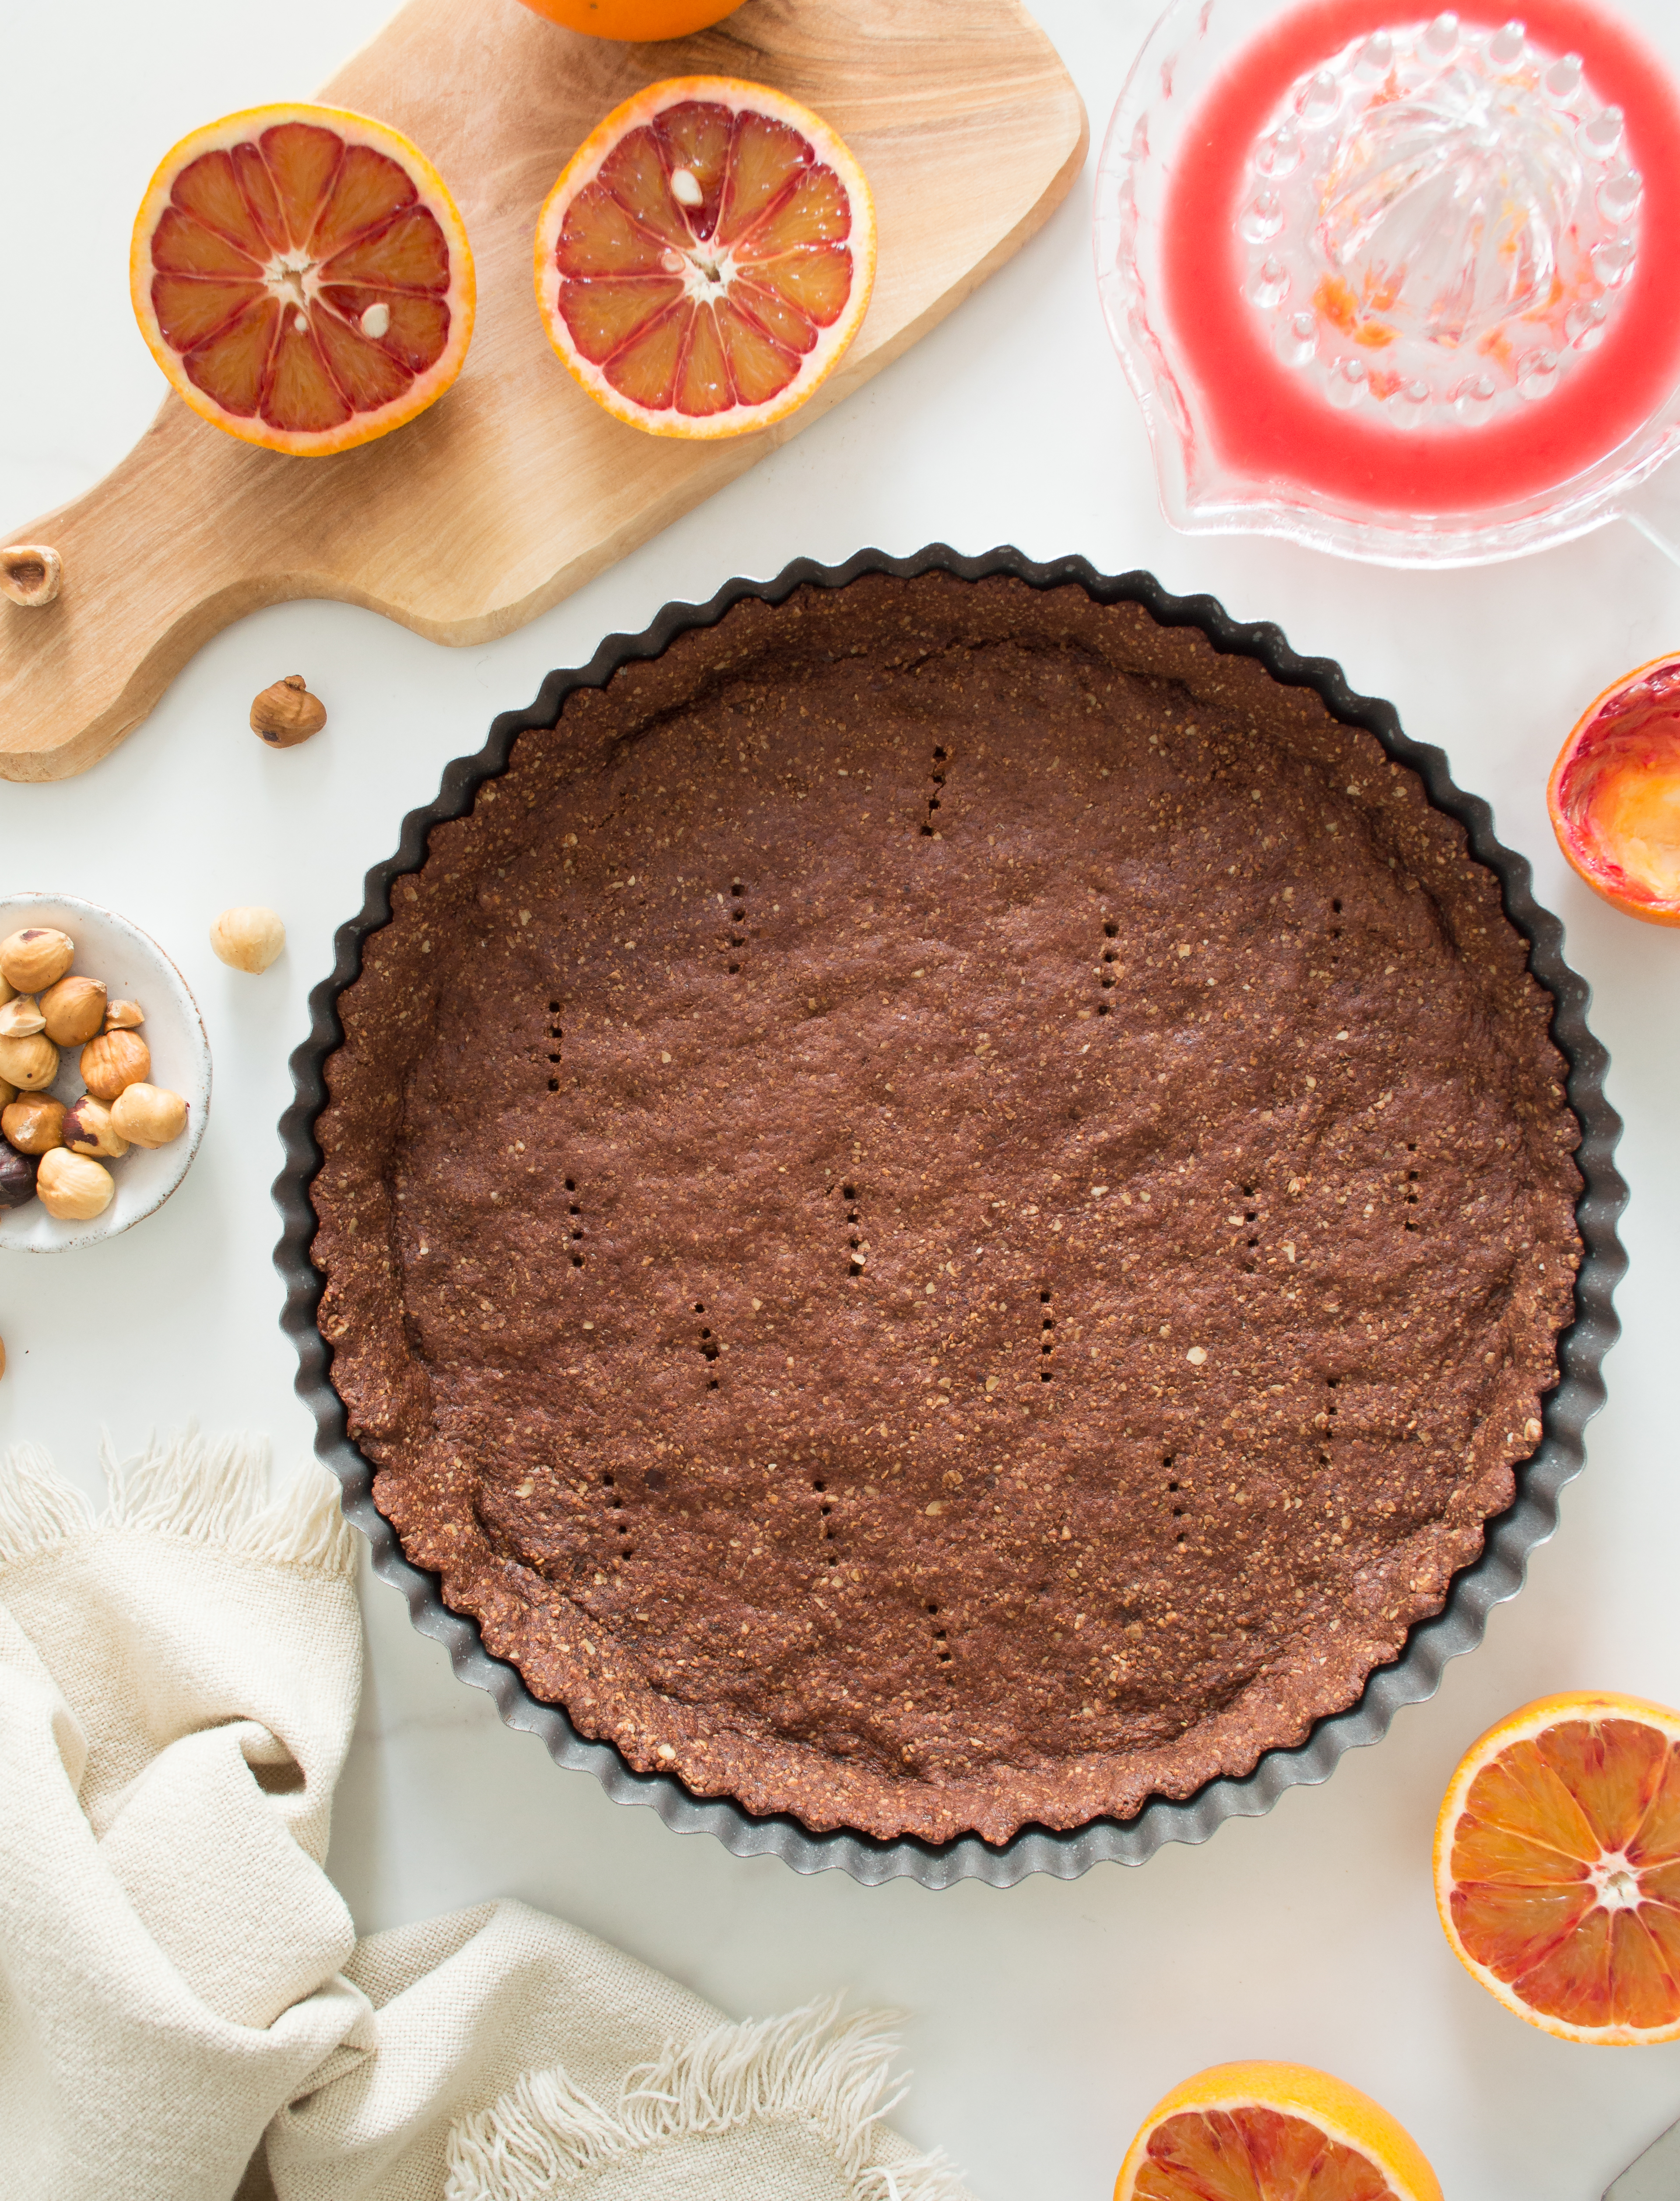 Making vegan blood orange & chocolate tart - perfect dessert for Valentine's Day